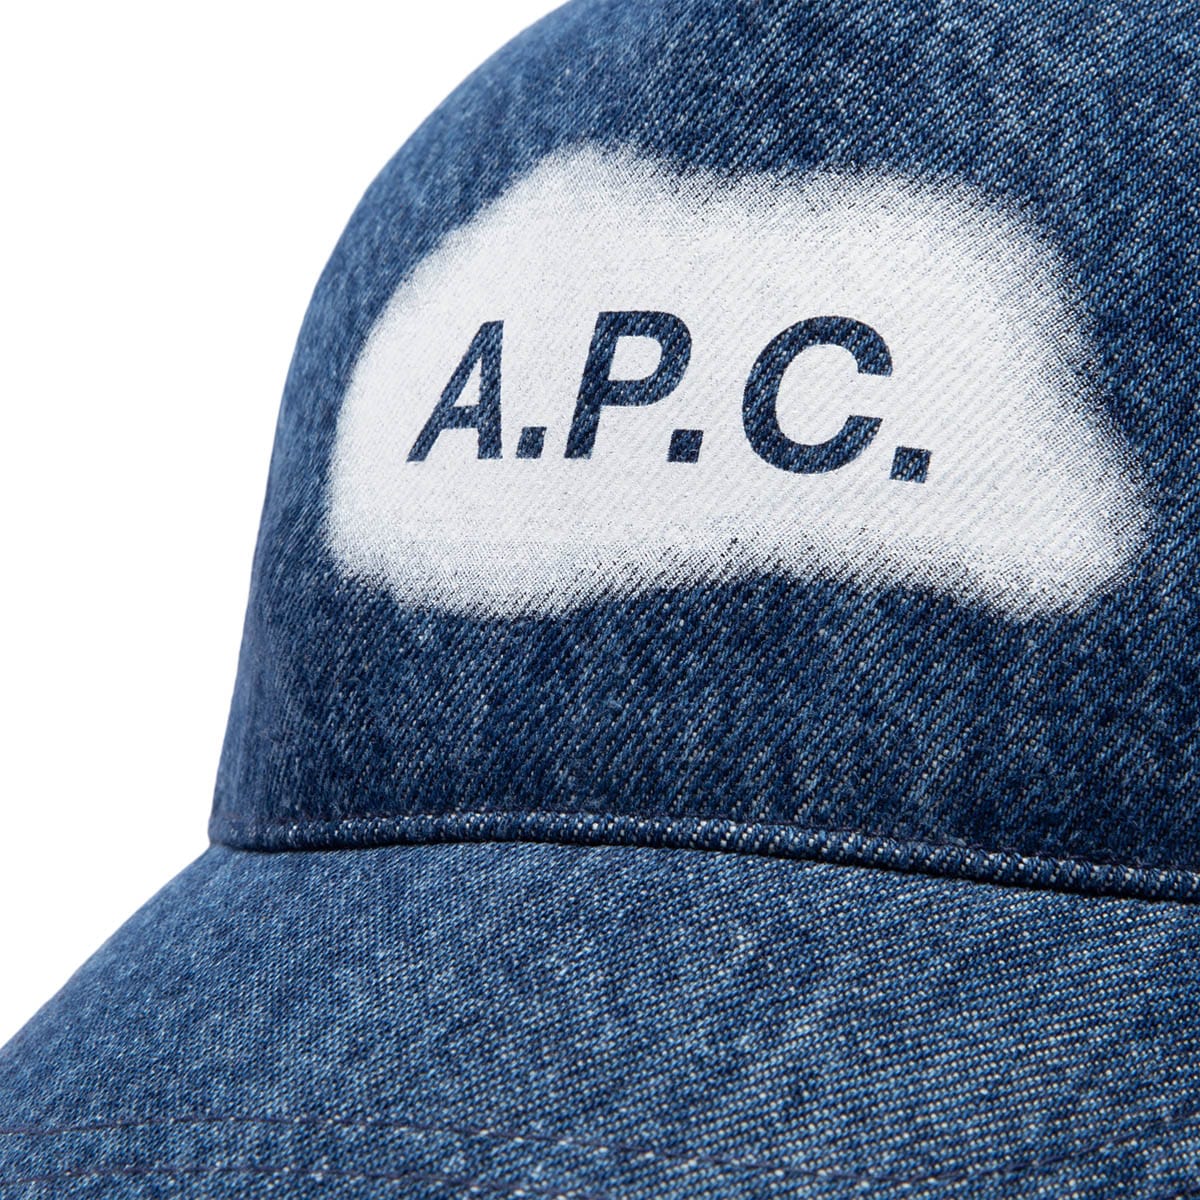 A.P.C. Headwear EDEN BASEBALL CAP